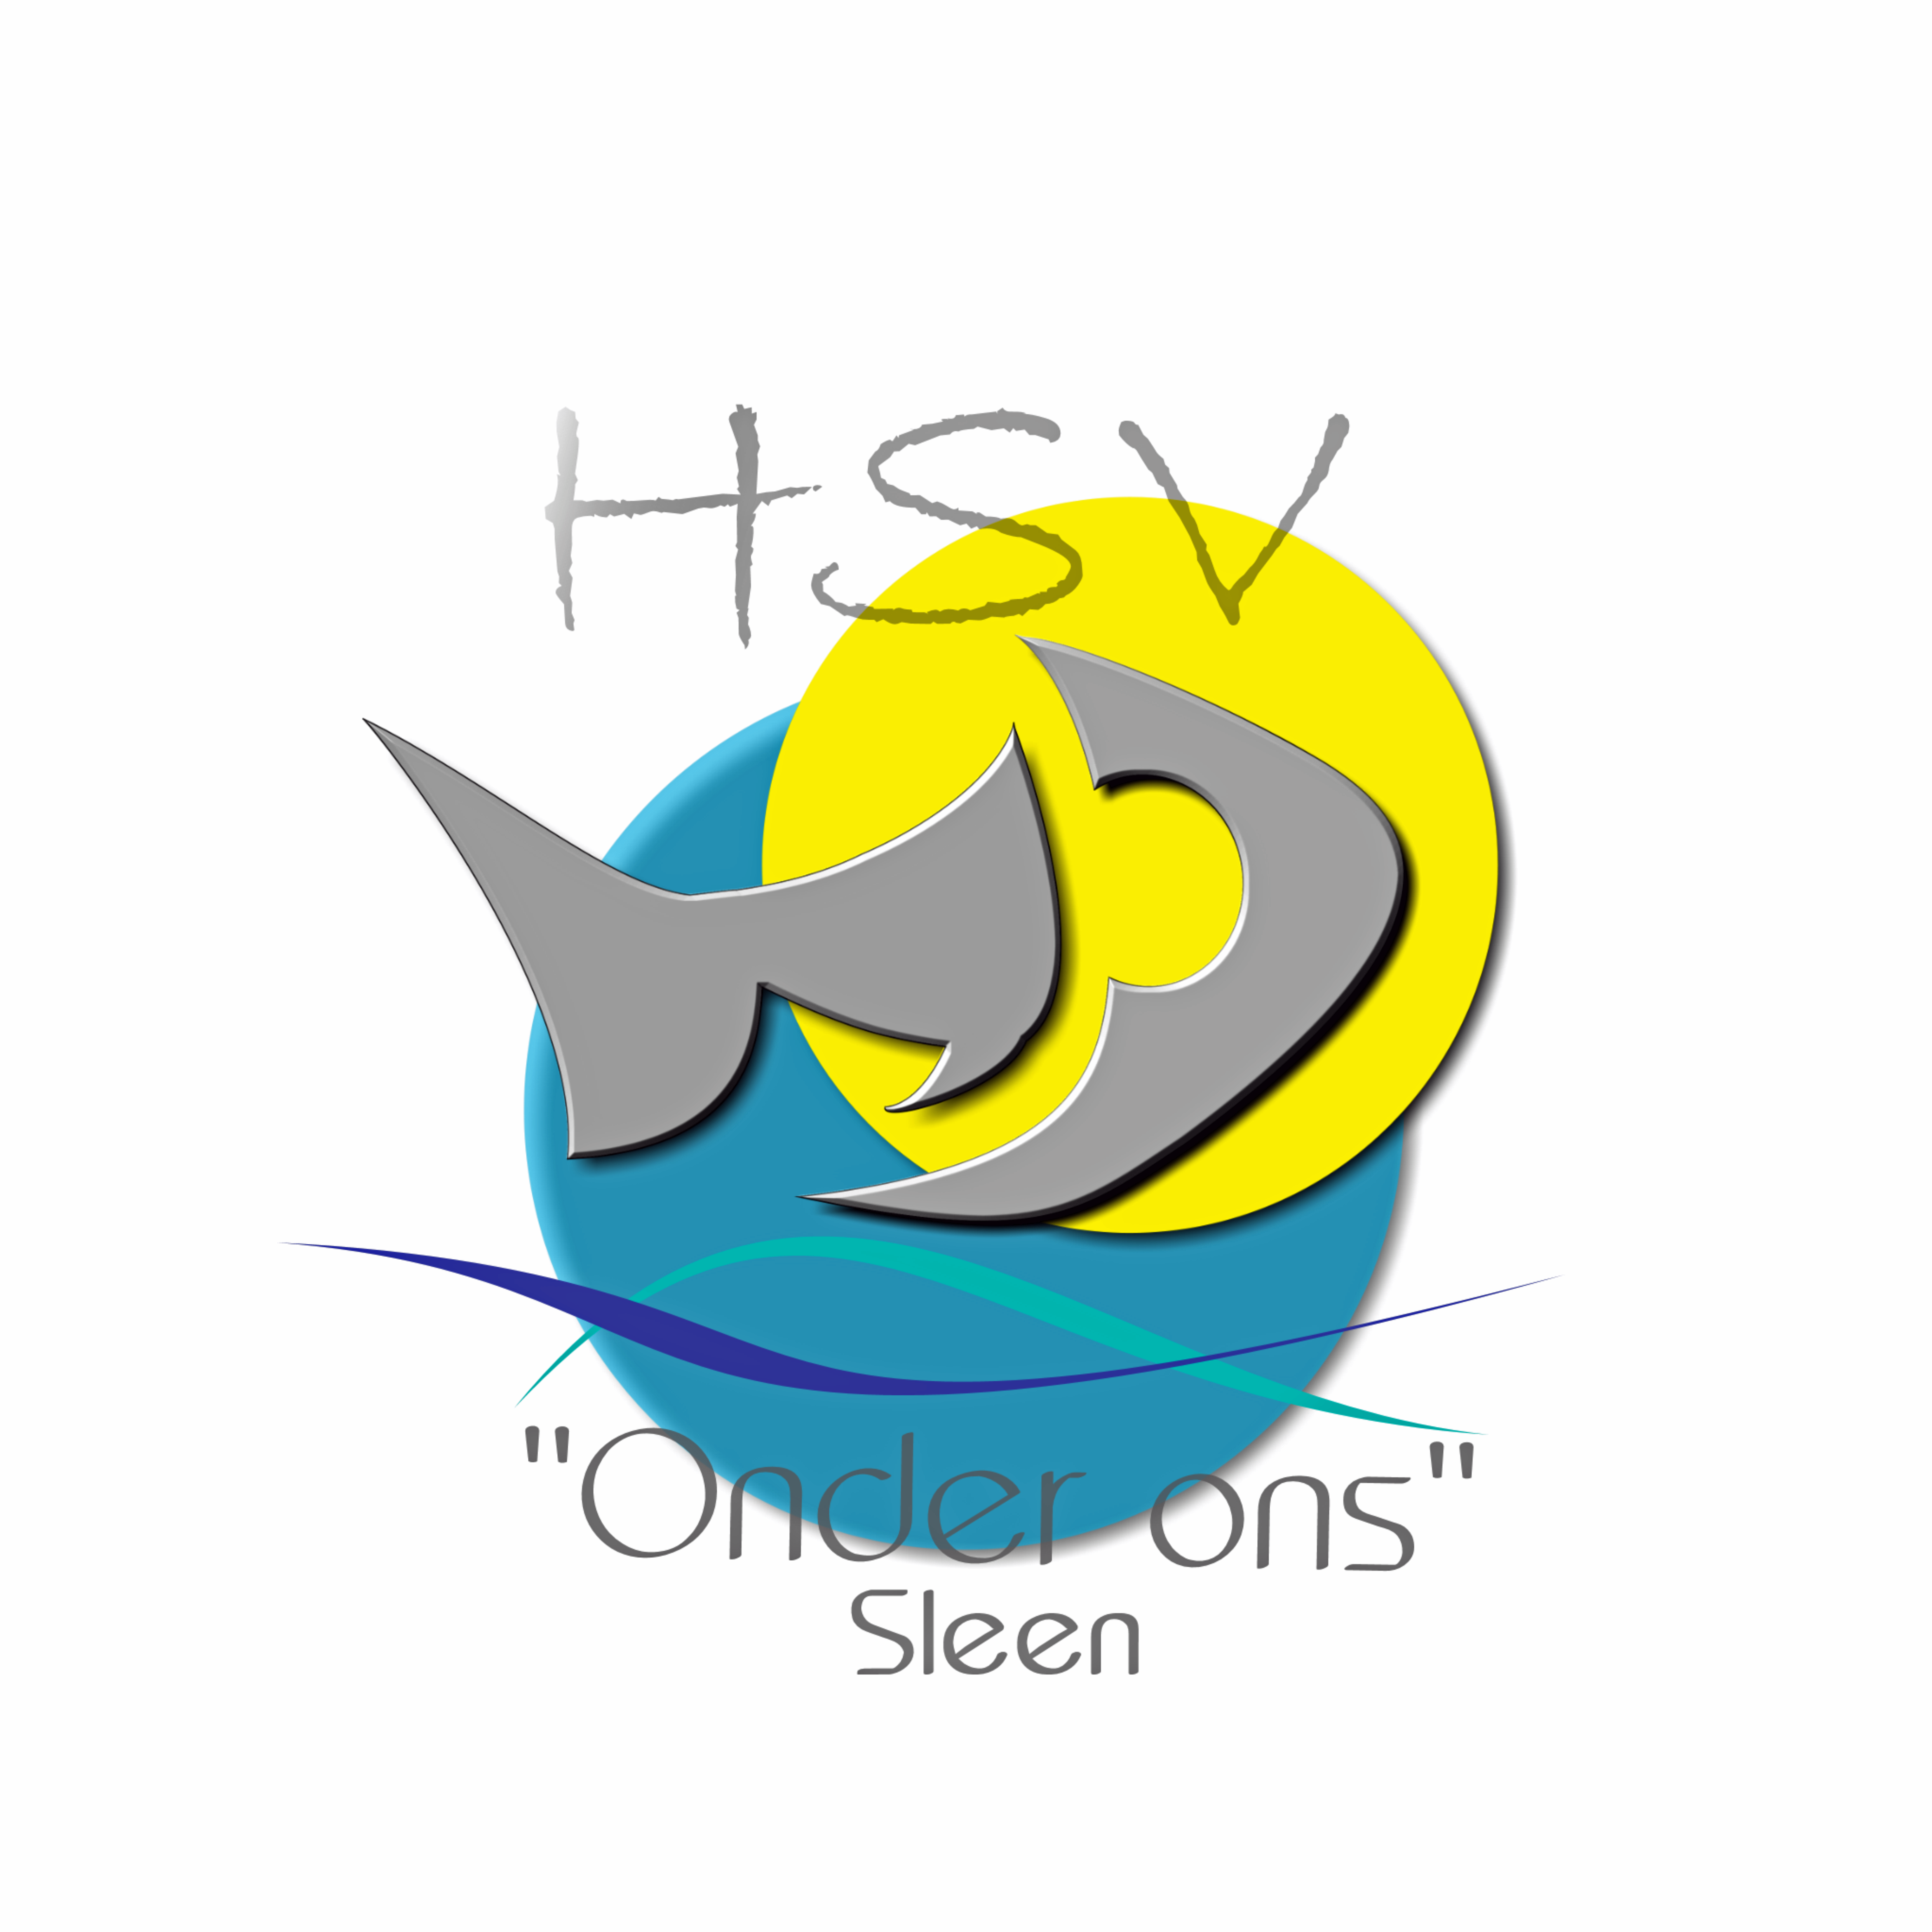 HSV Onder Ons Sleen